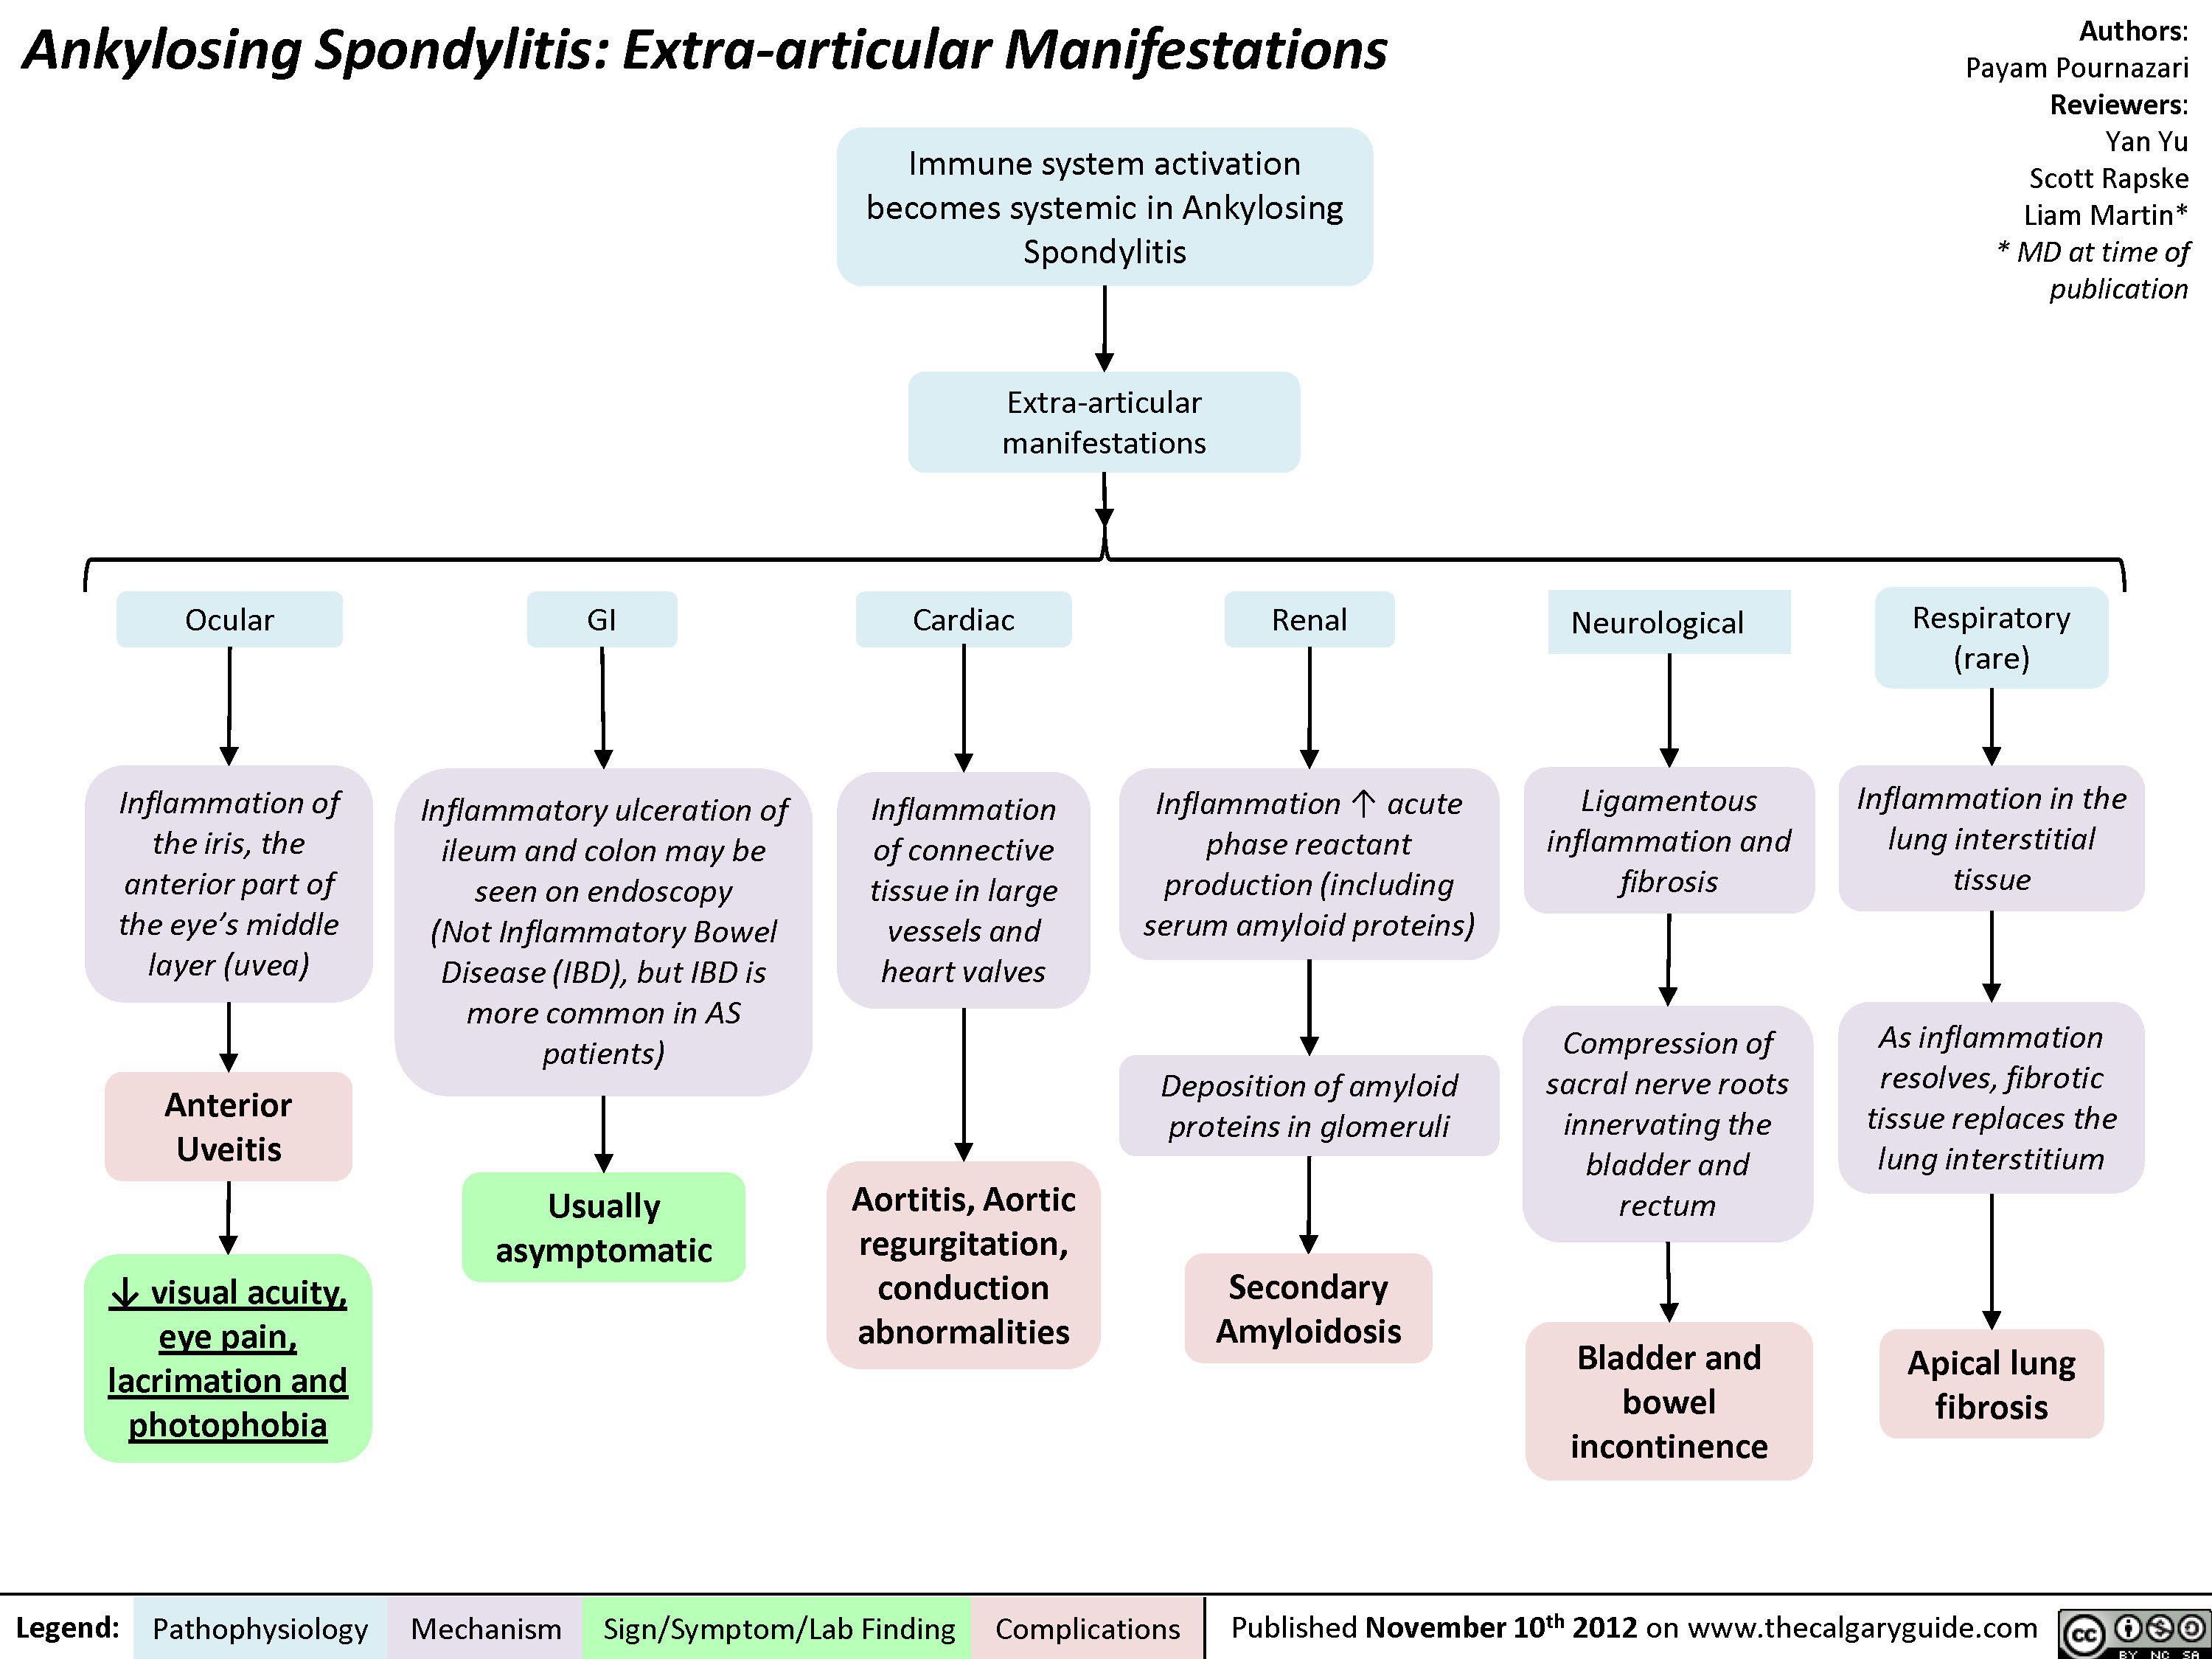 Ankylosing Spondylitis: Extra-articular Manifestations